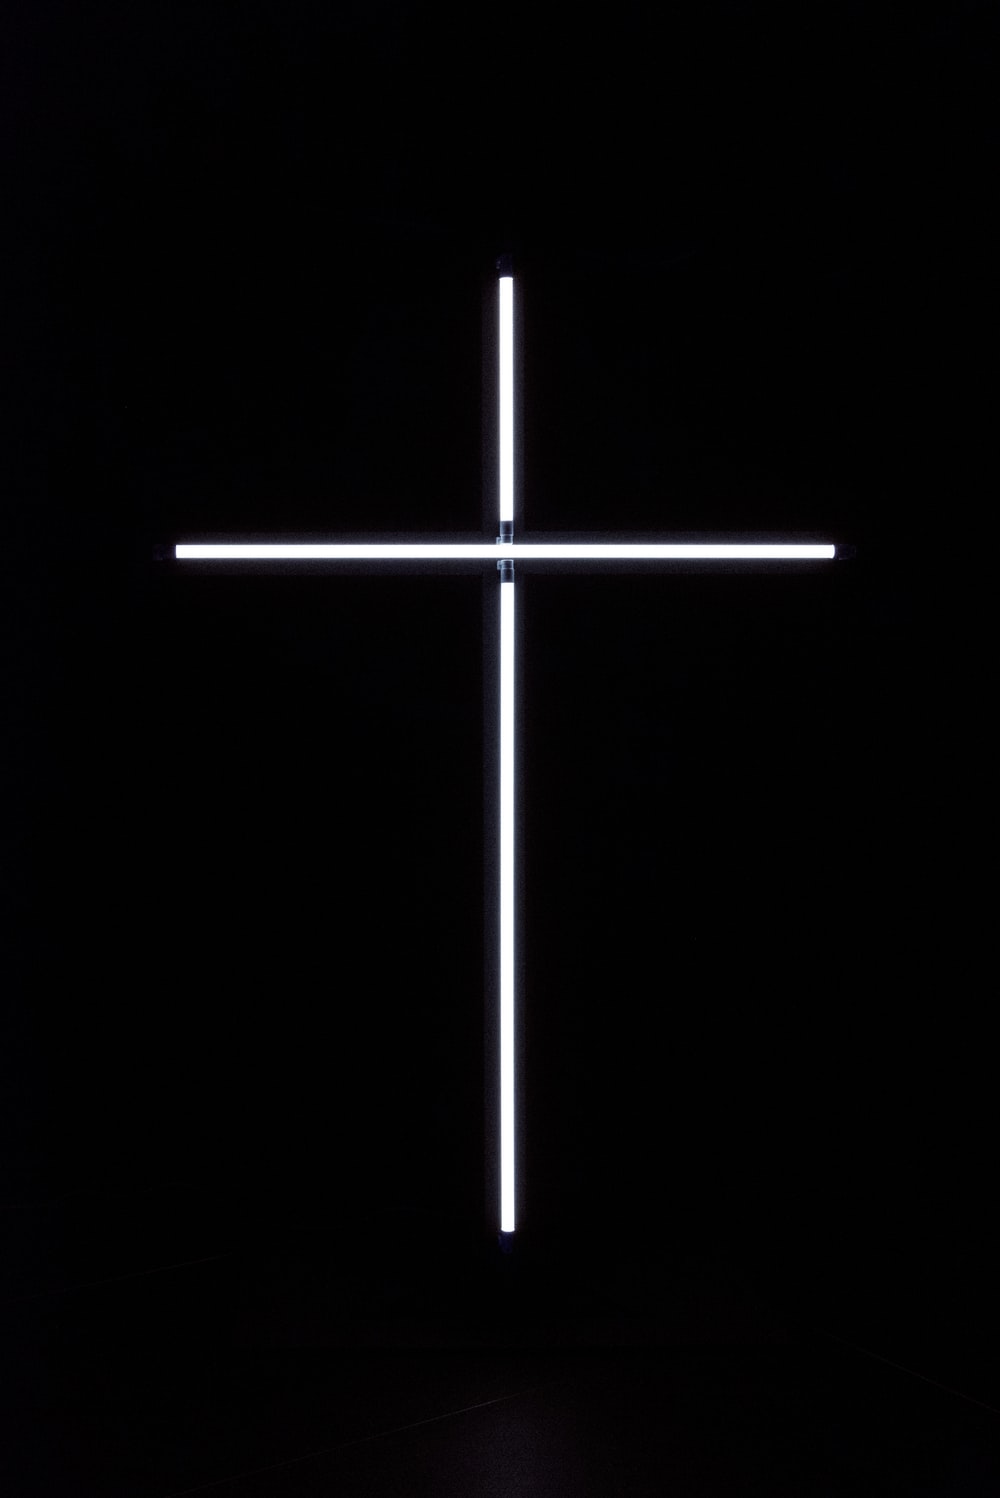 Neon Cross Pictures Image